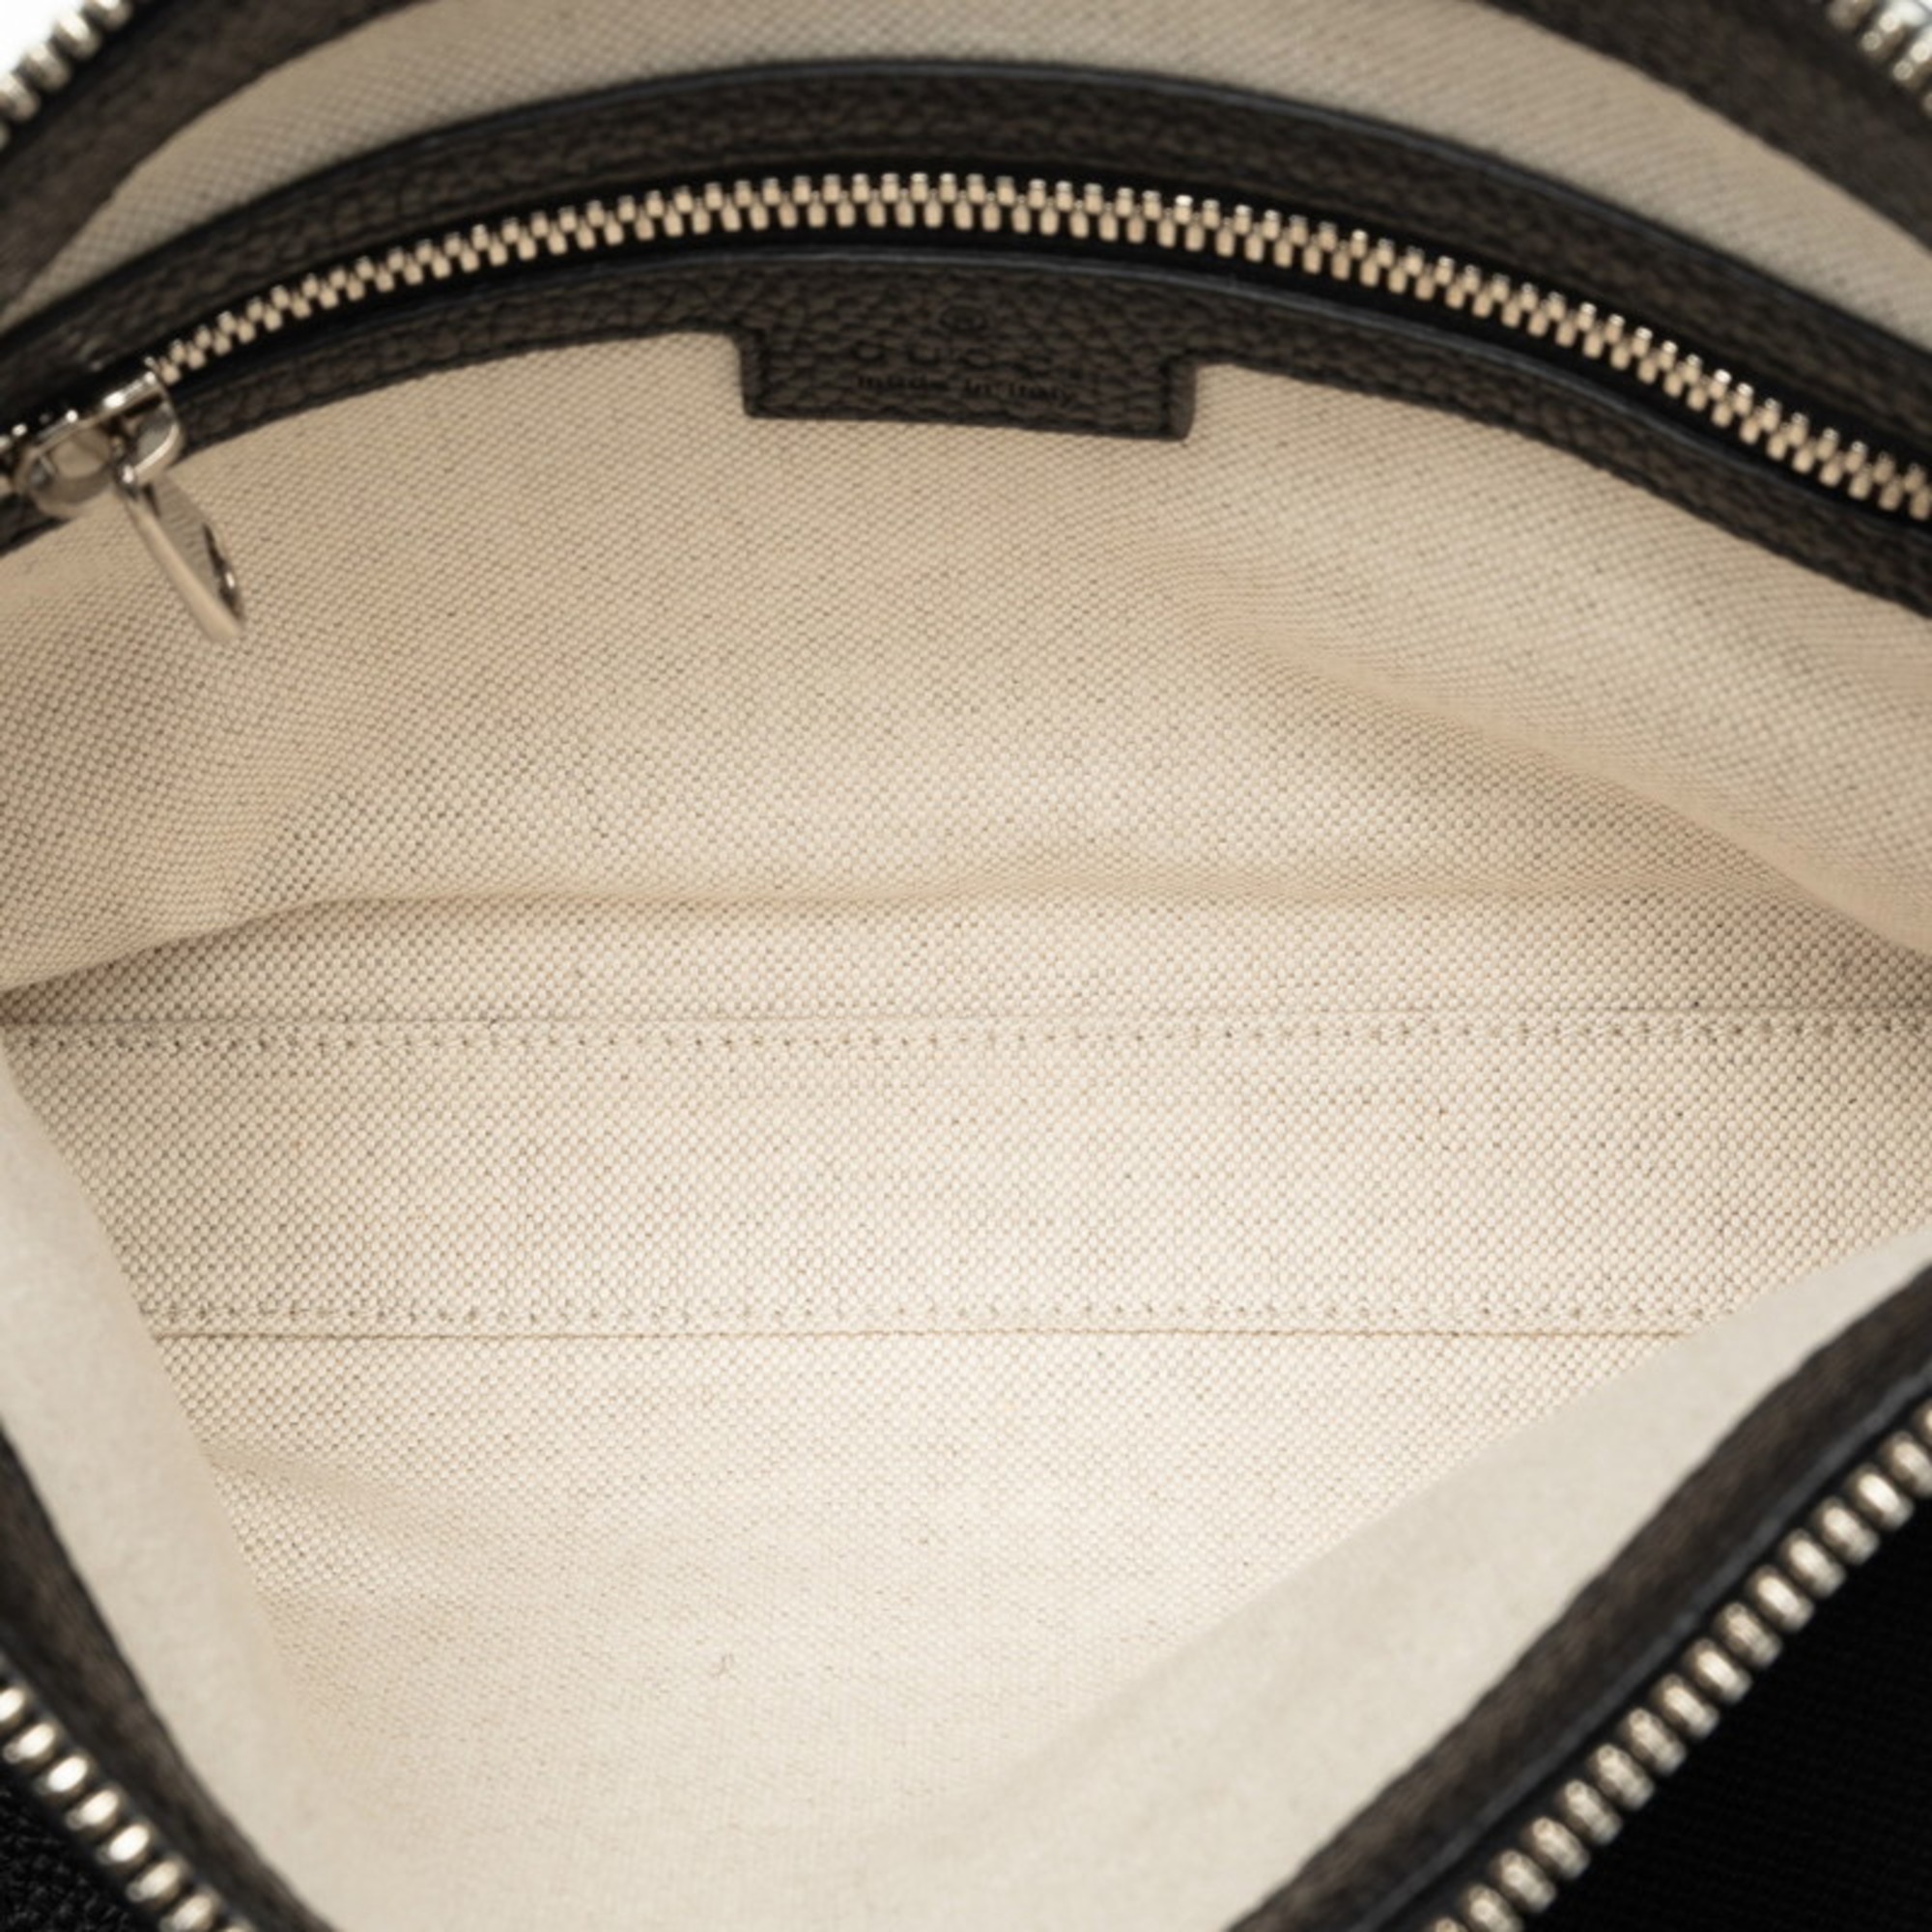 Gucci Jumbo GG Small Bag Shoulder 761747 Black Leather Women's GUCCI